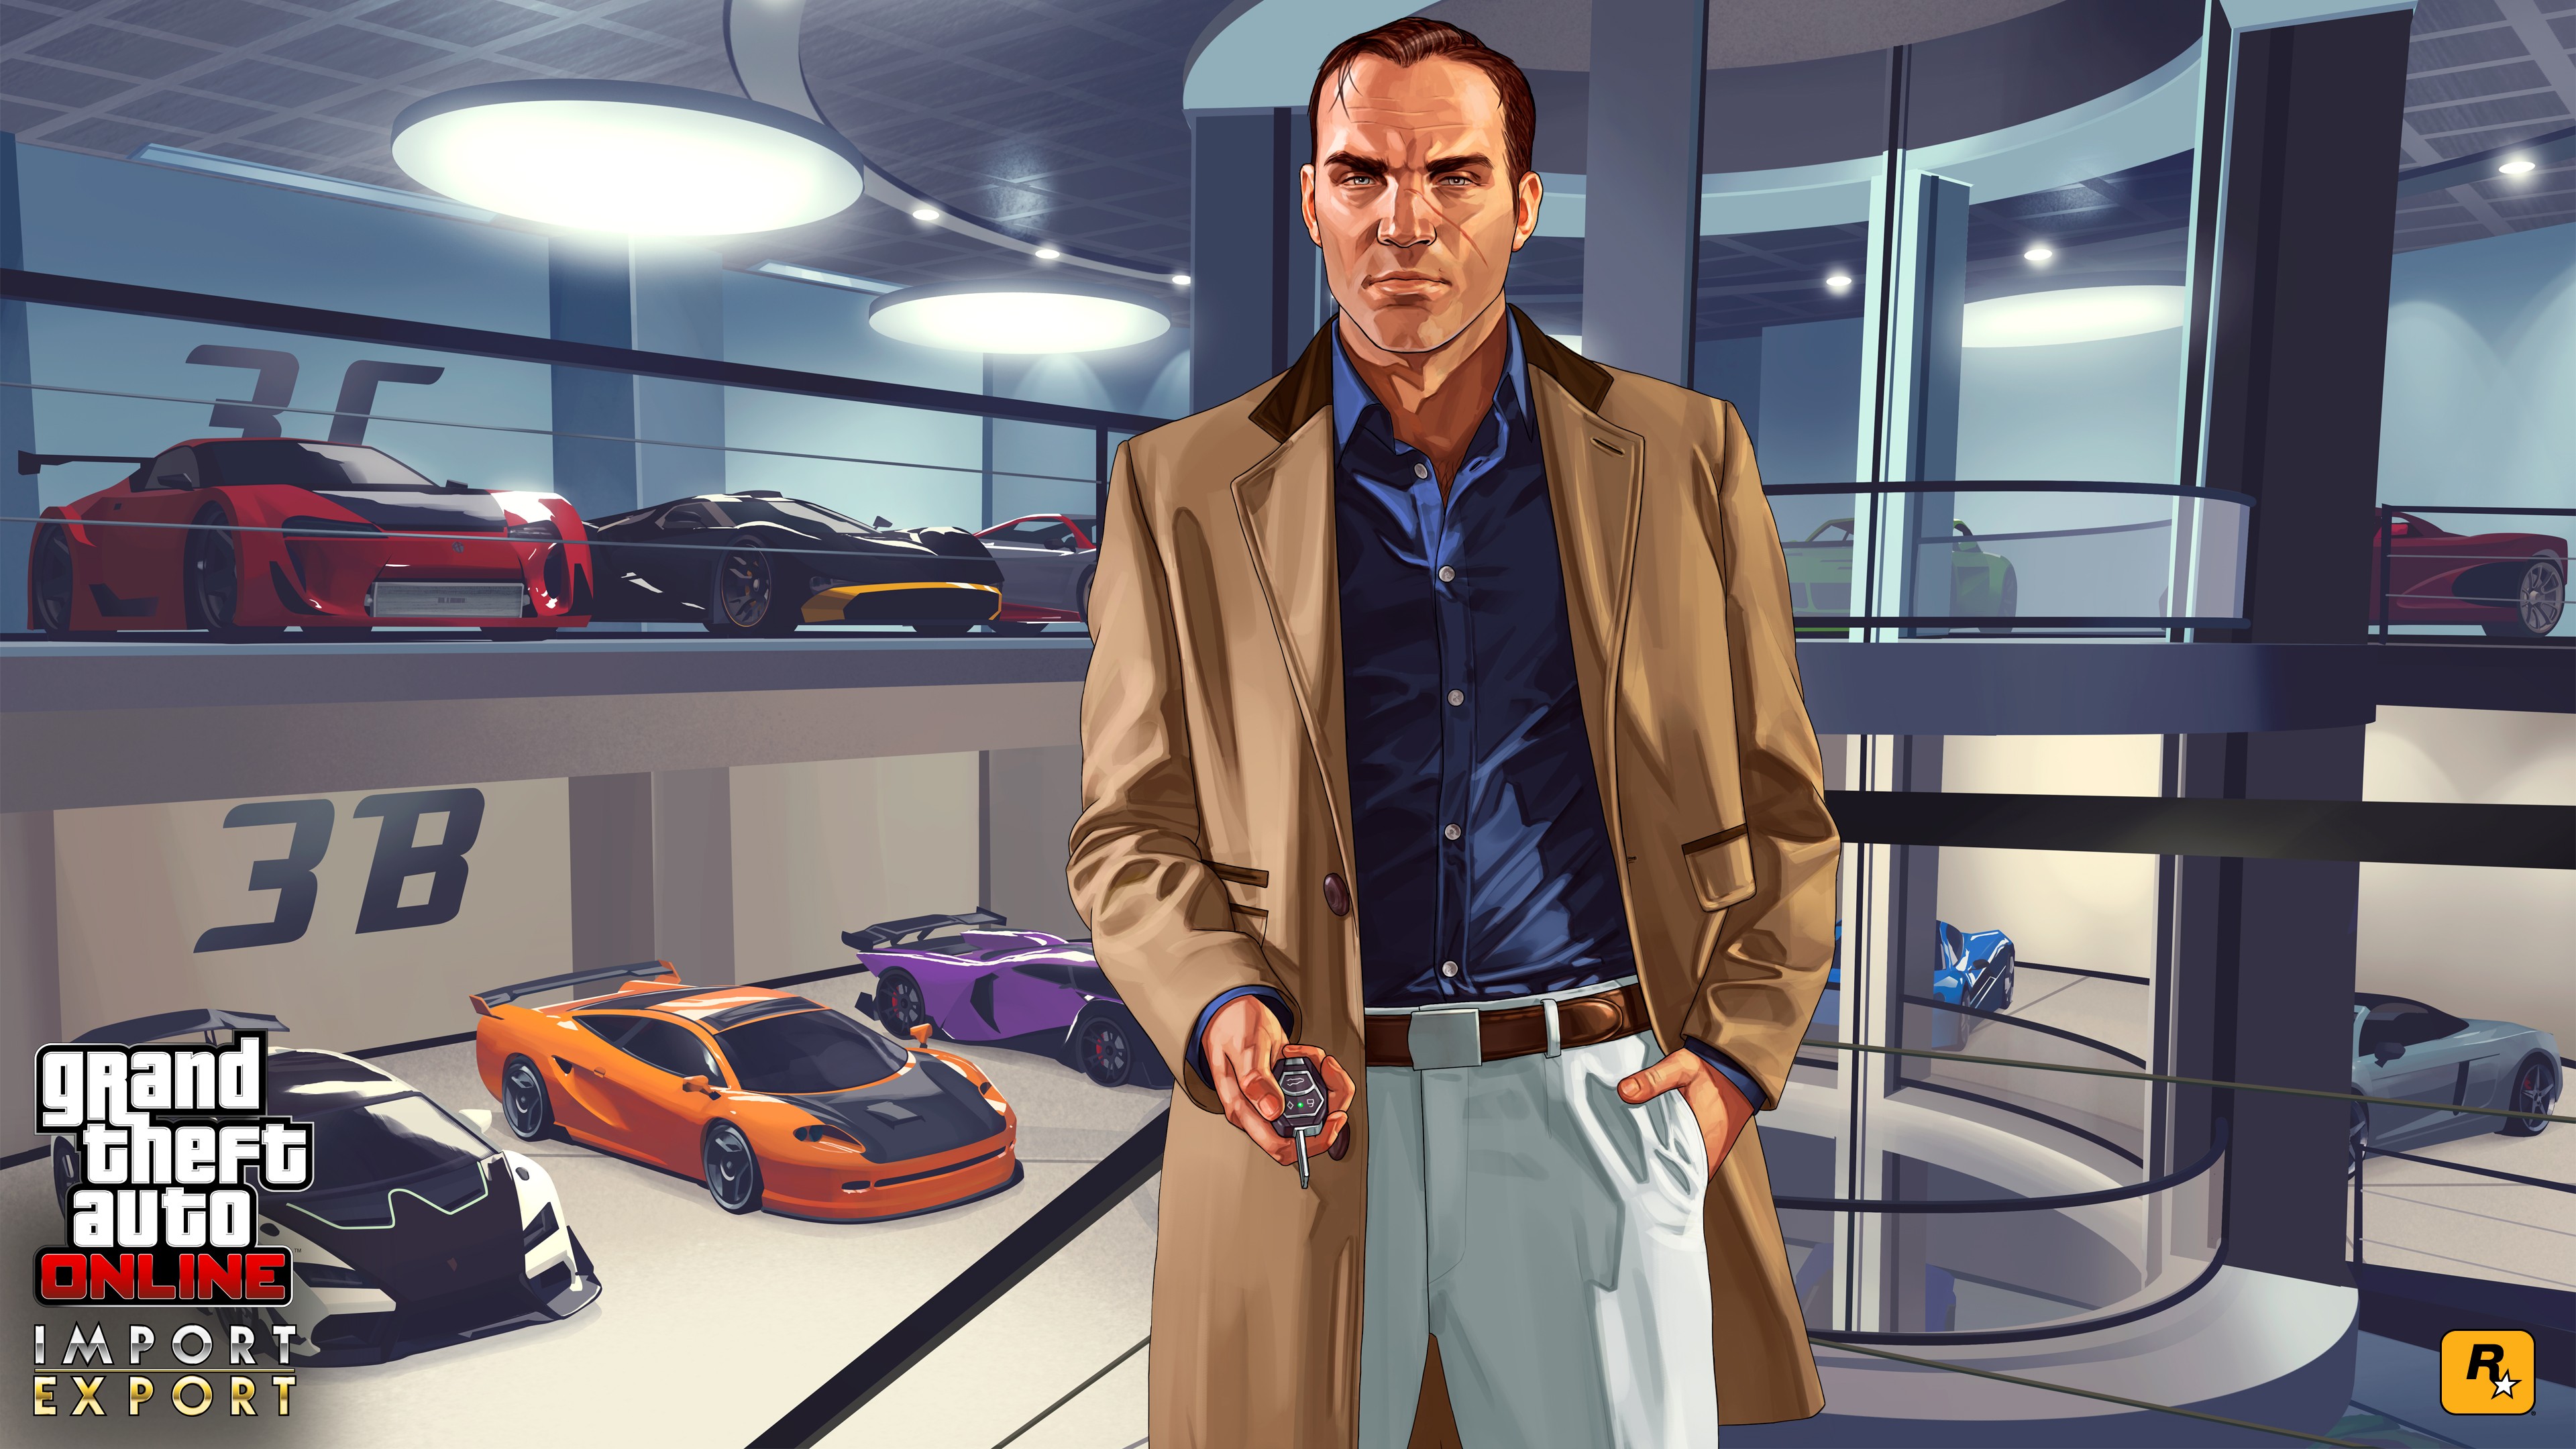 General 3840x2160 Rockstar Games Grand Theft Auto V Grand Theft Auto Online DLC car vehicle garage video games